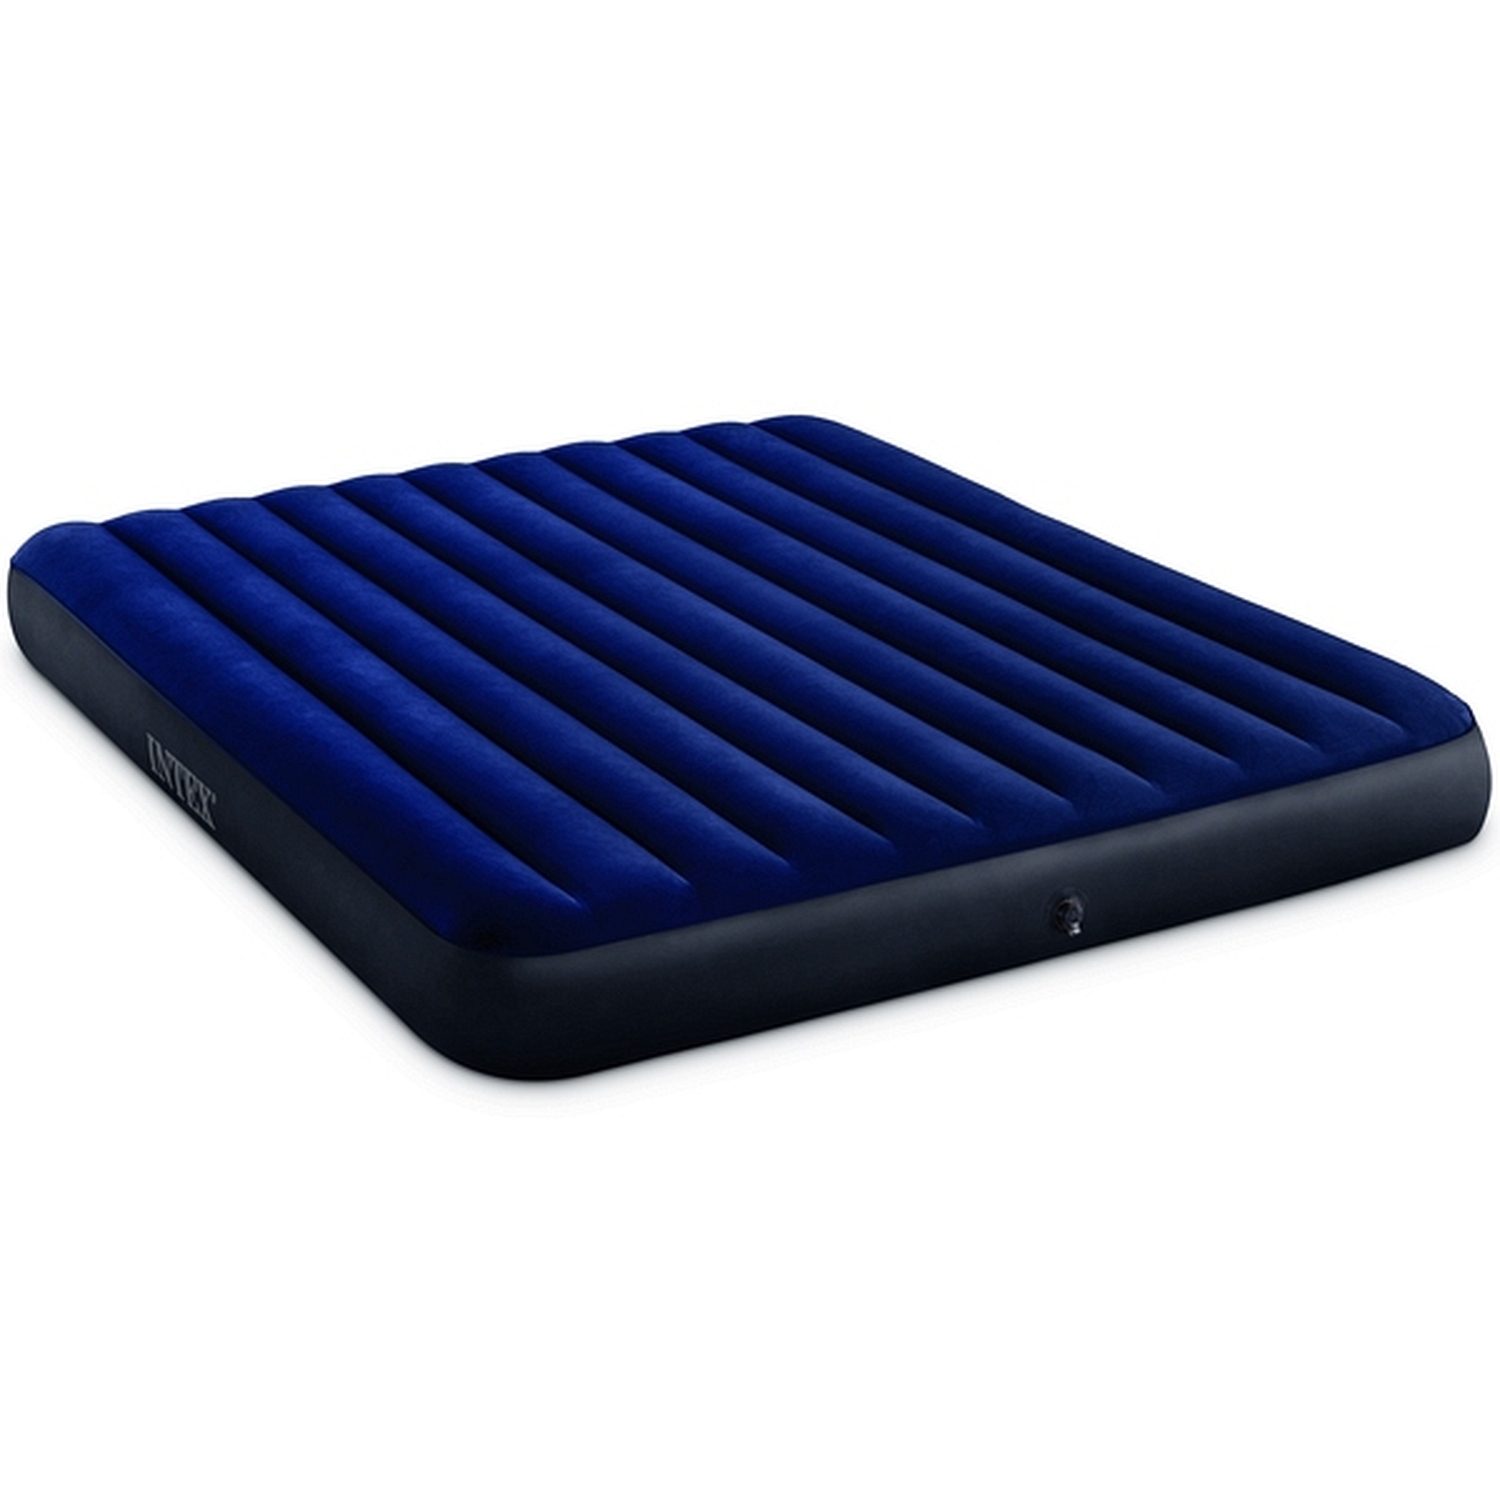 Матрас надувной Intex Classic Downy Airbed Fiber-Tech, 64758, 137 х 191 х 25 см